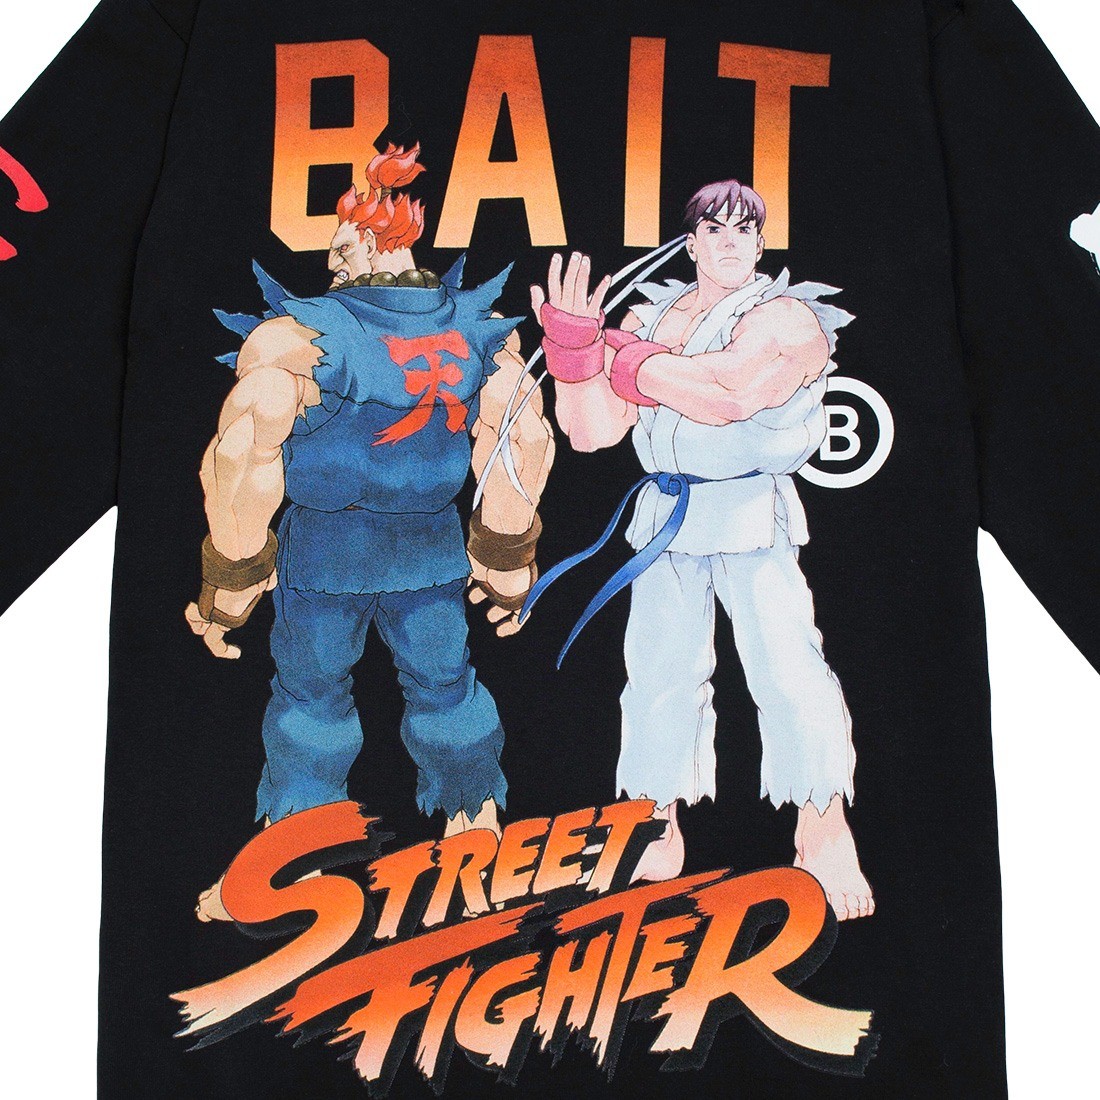 BAIT x Street Fighter Men Retro Ryu Tee white 30 Anniversary Cap Com Size S